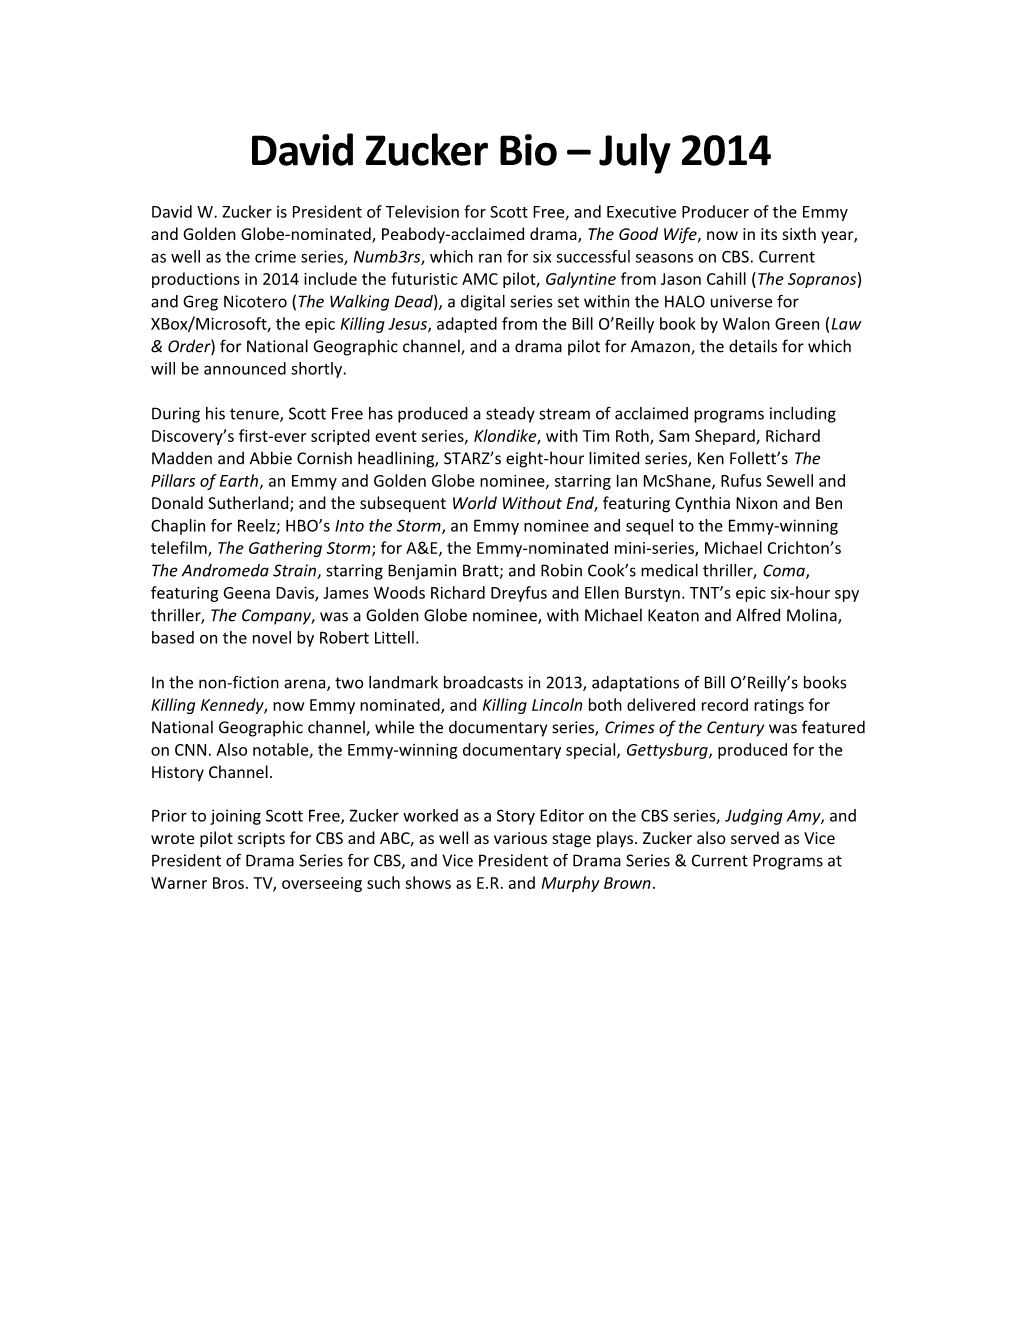 David Zucker Bio July 2014